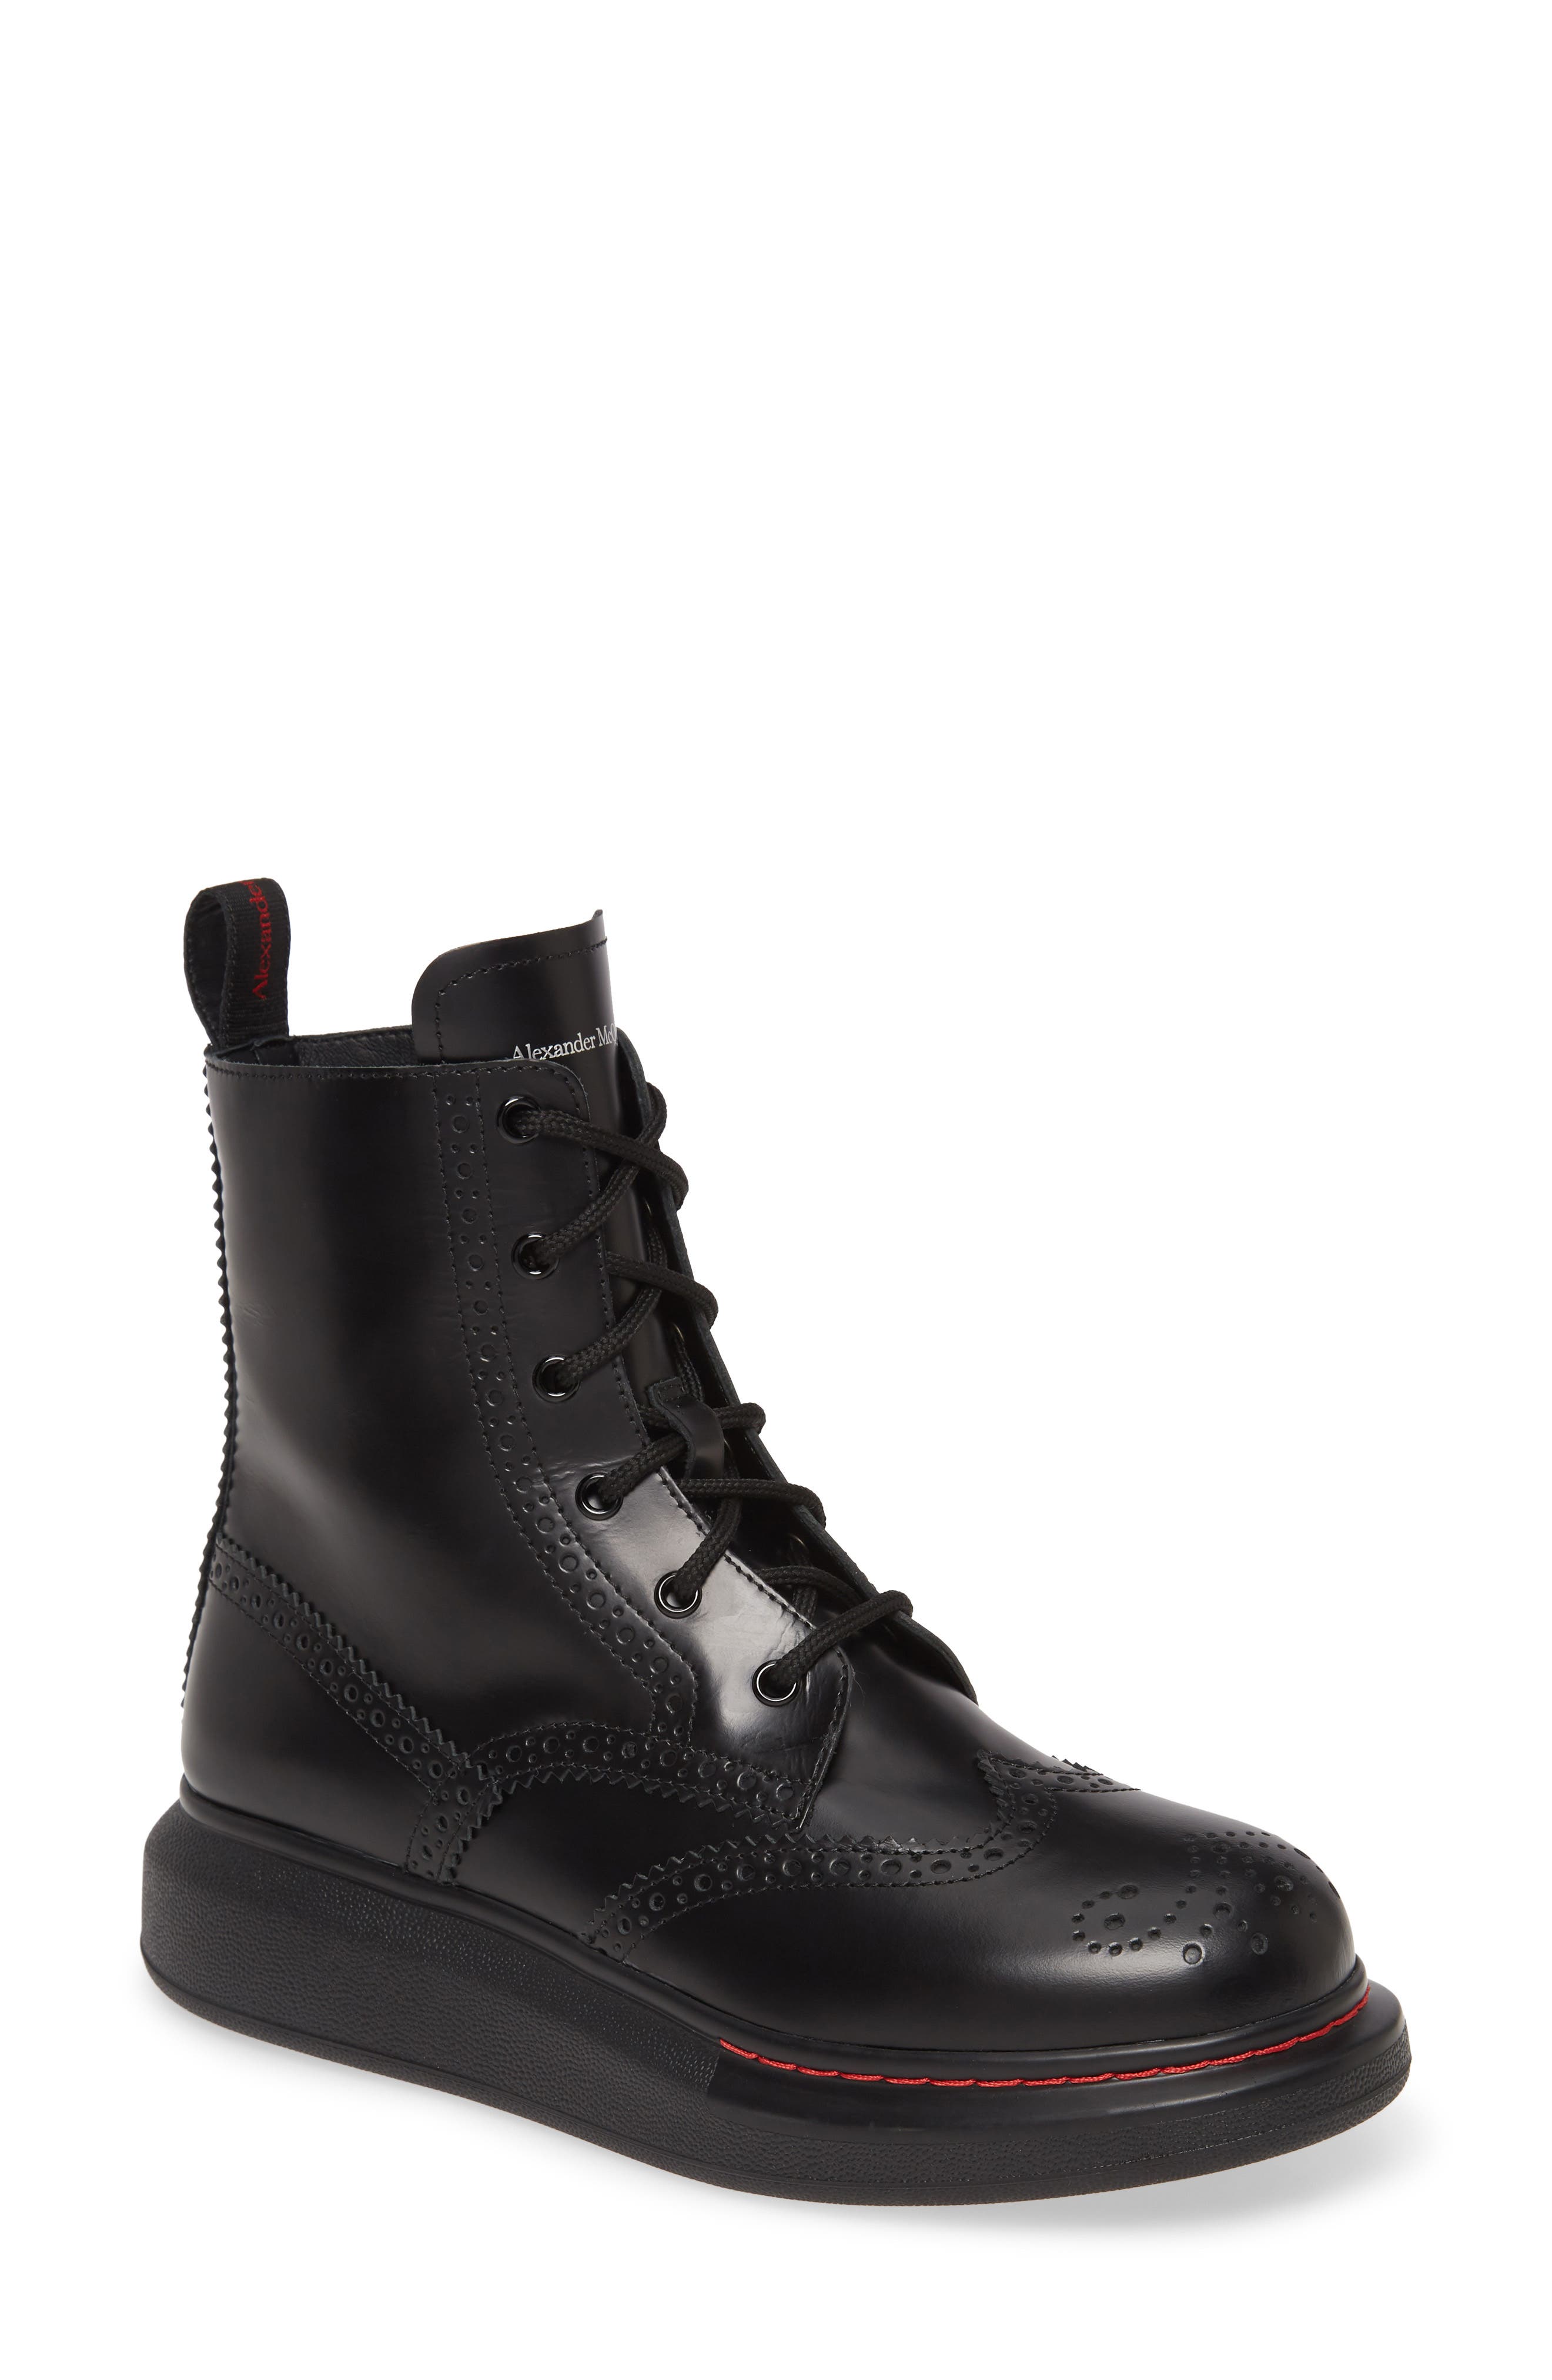 valentino combat boots sale